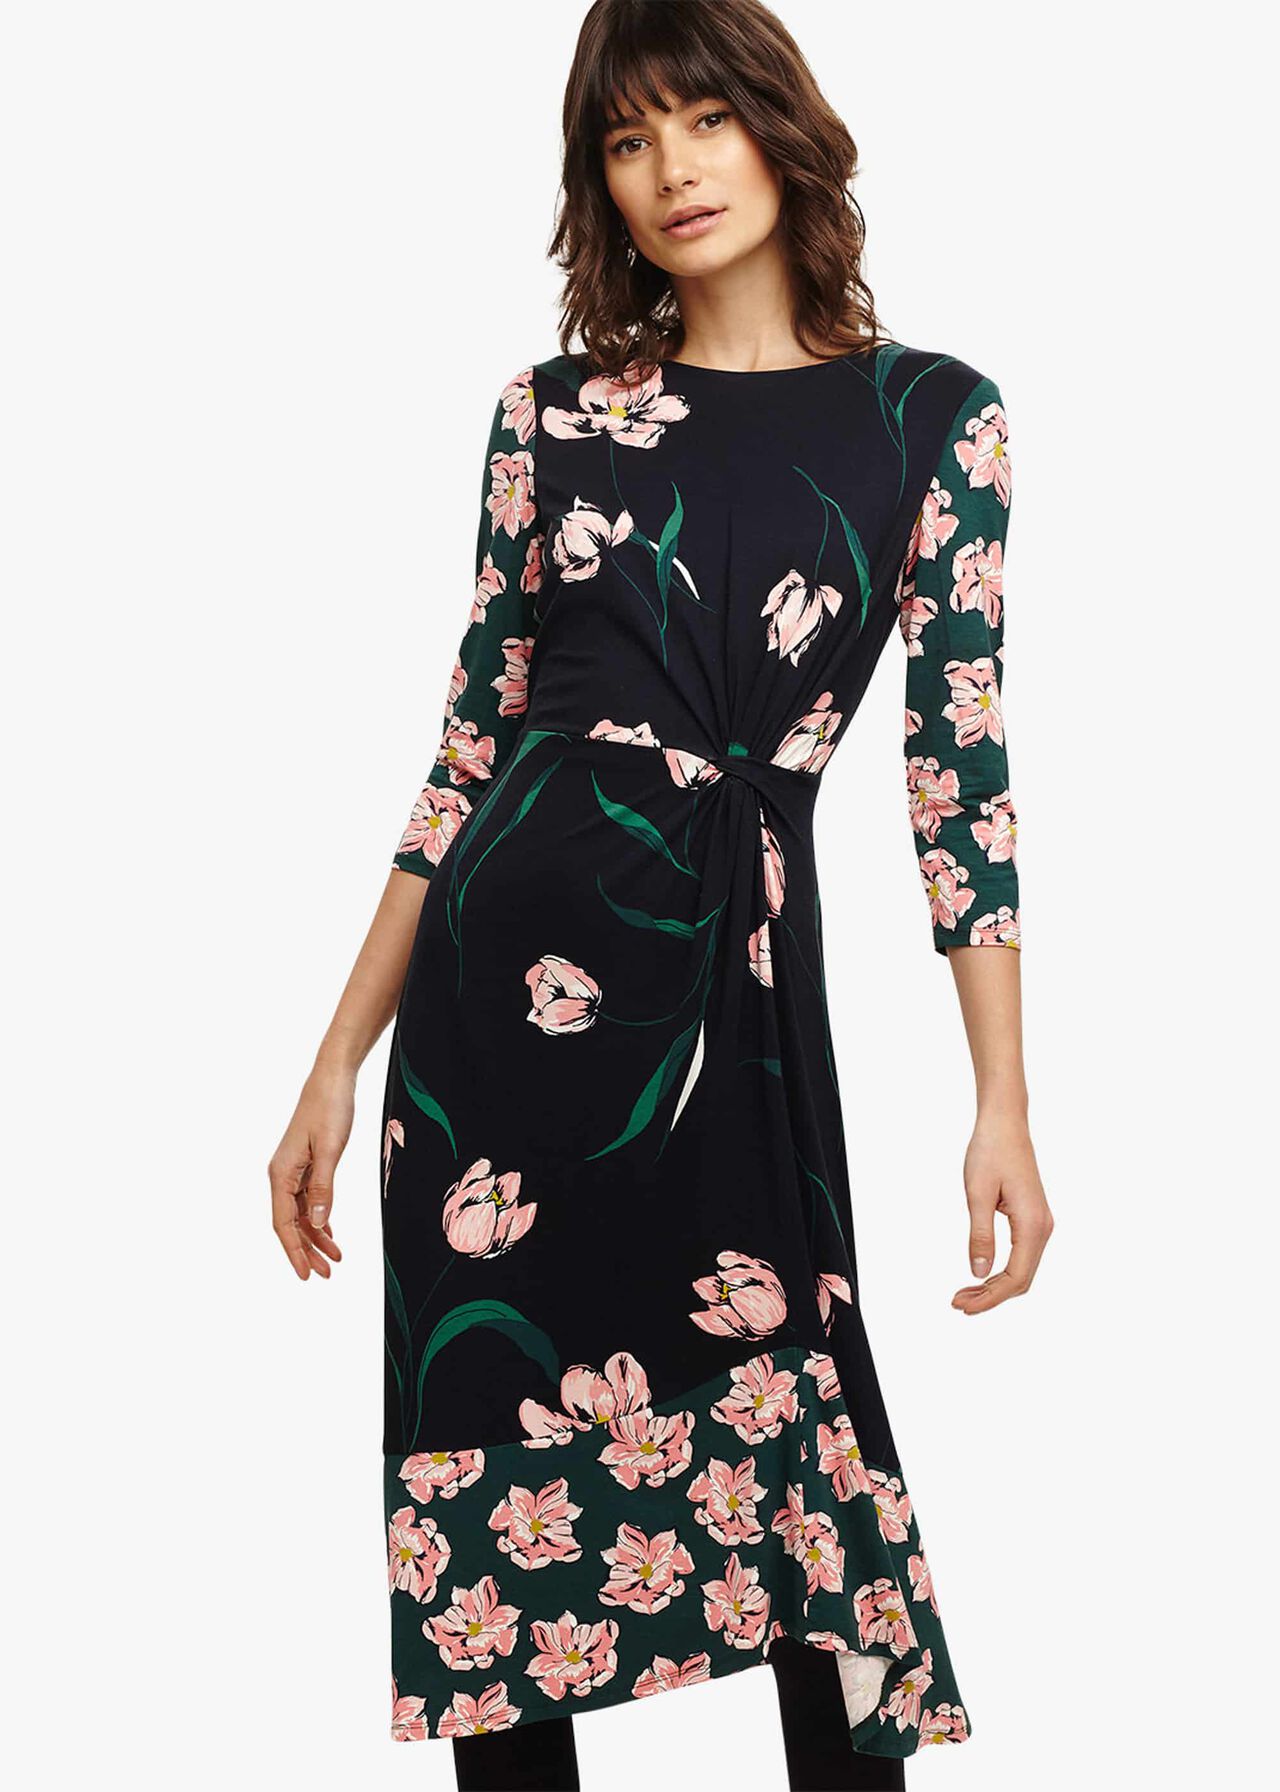 Leto Floral Print Dress